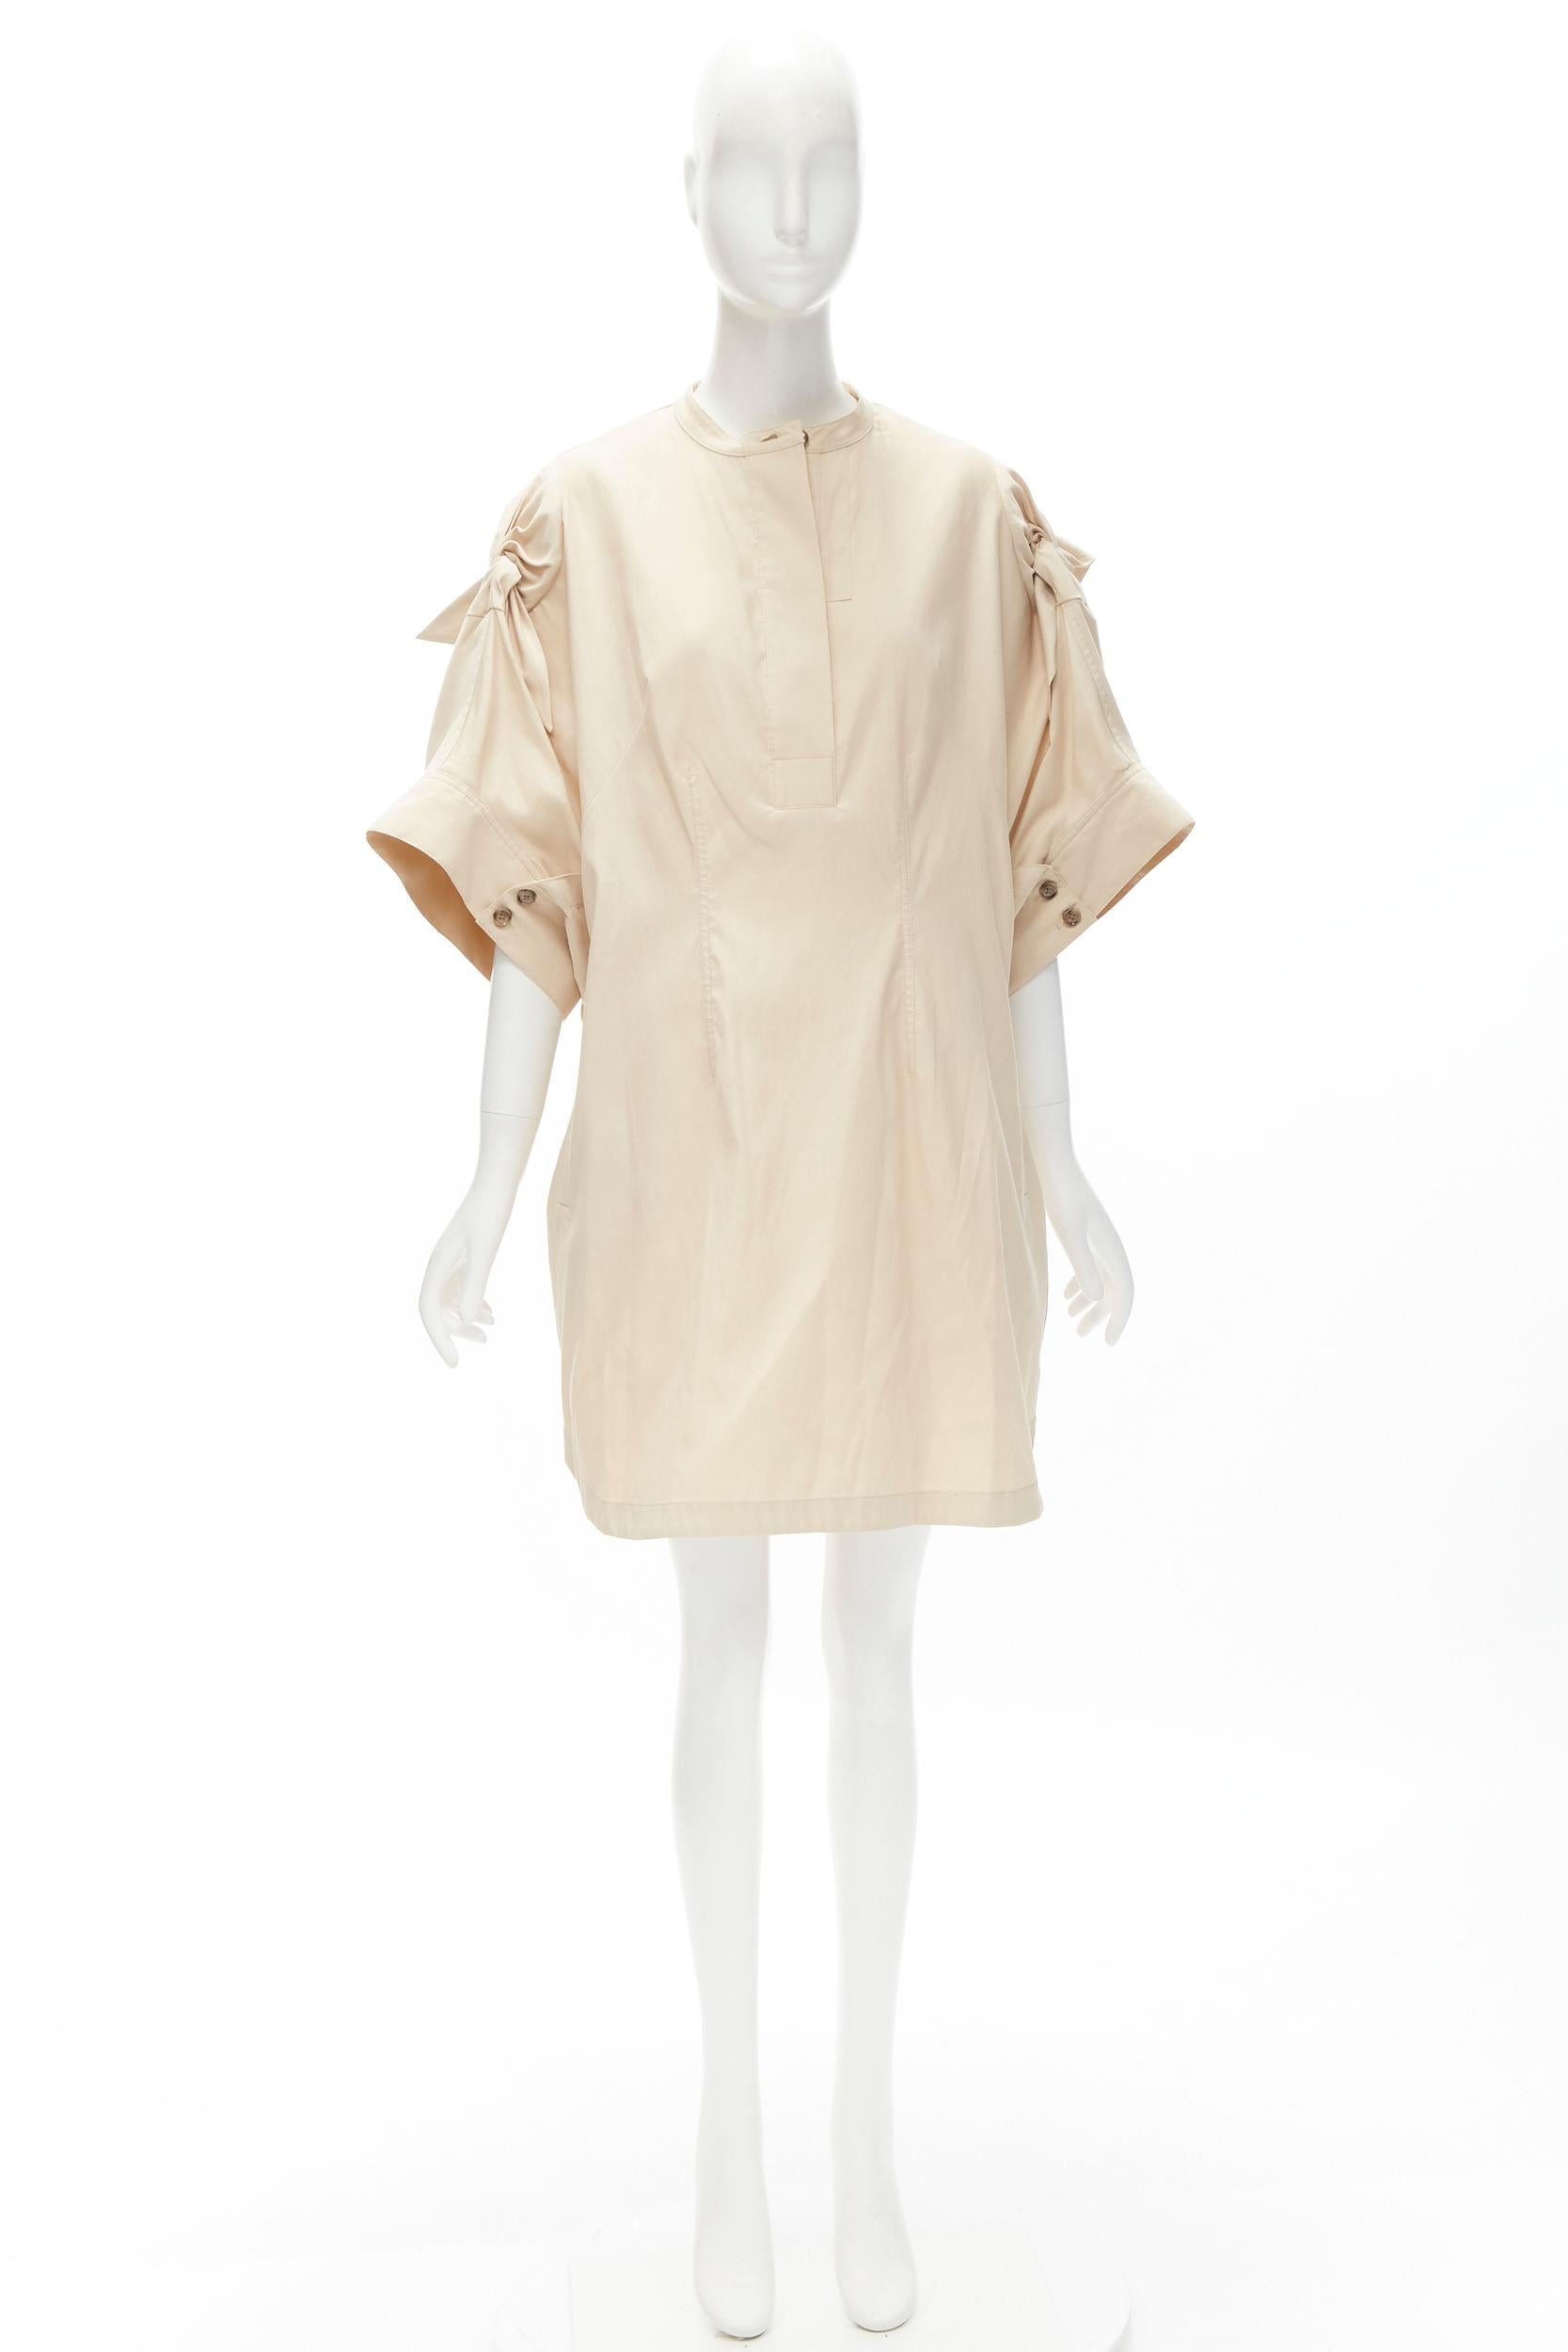 3.1 PHILLIP LIM beige cotton blend knot tie oversized cocoon dress US2 S For Sale 6